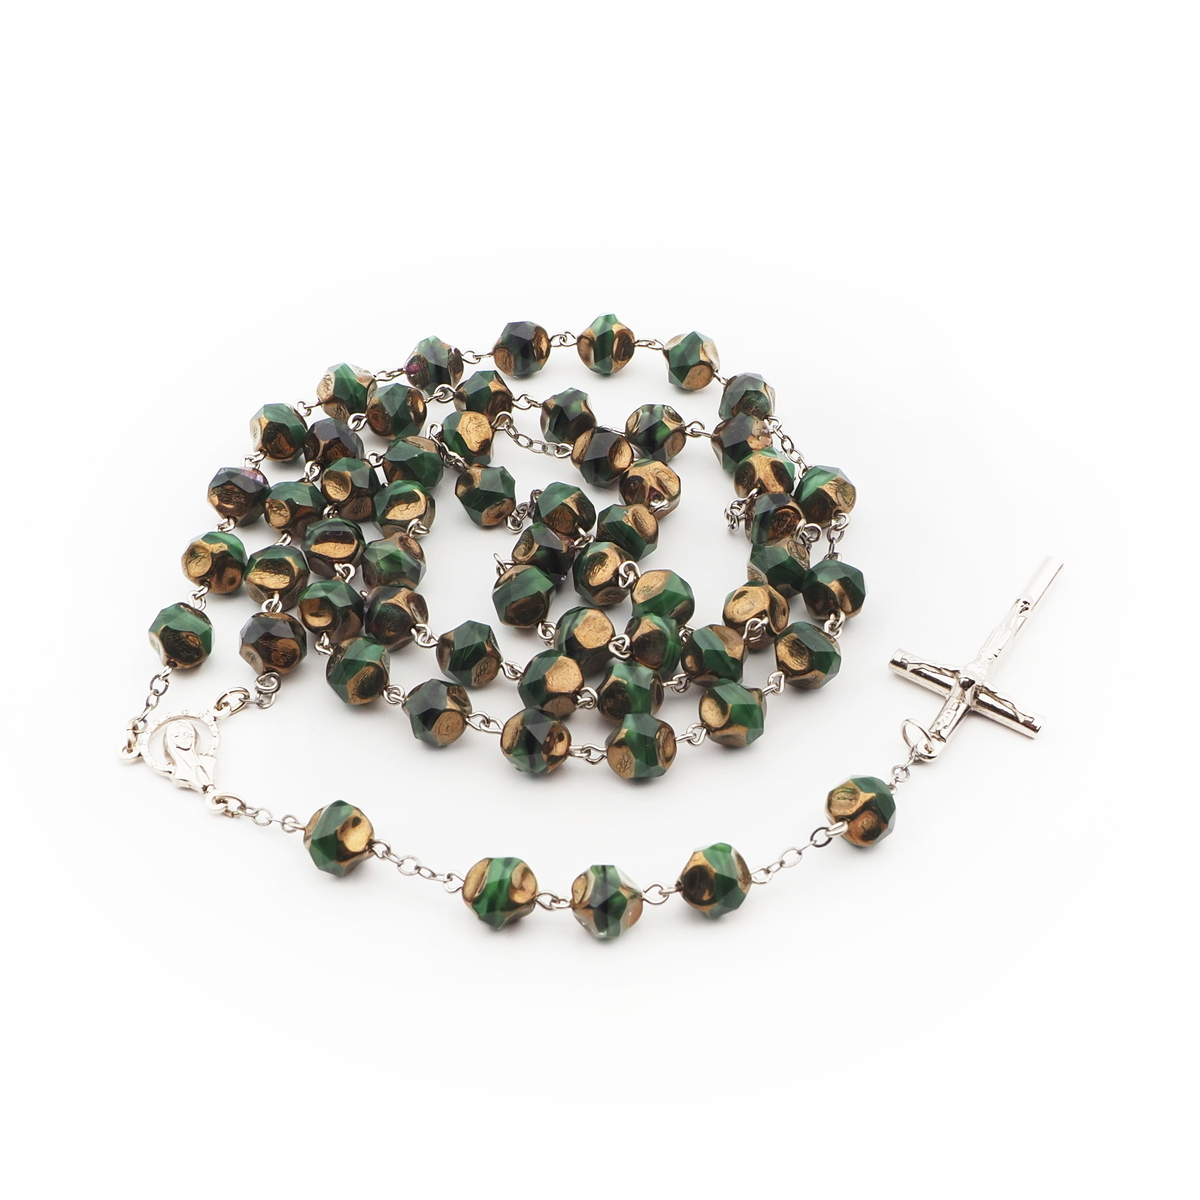 Handmade 5 decade rosary metallic glass beads silver tone crucifix